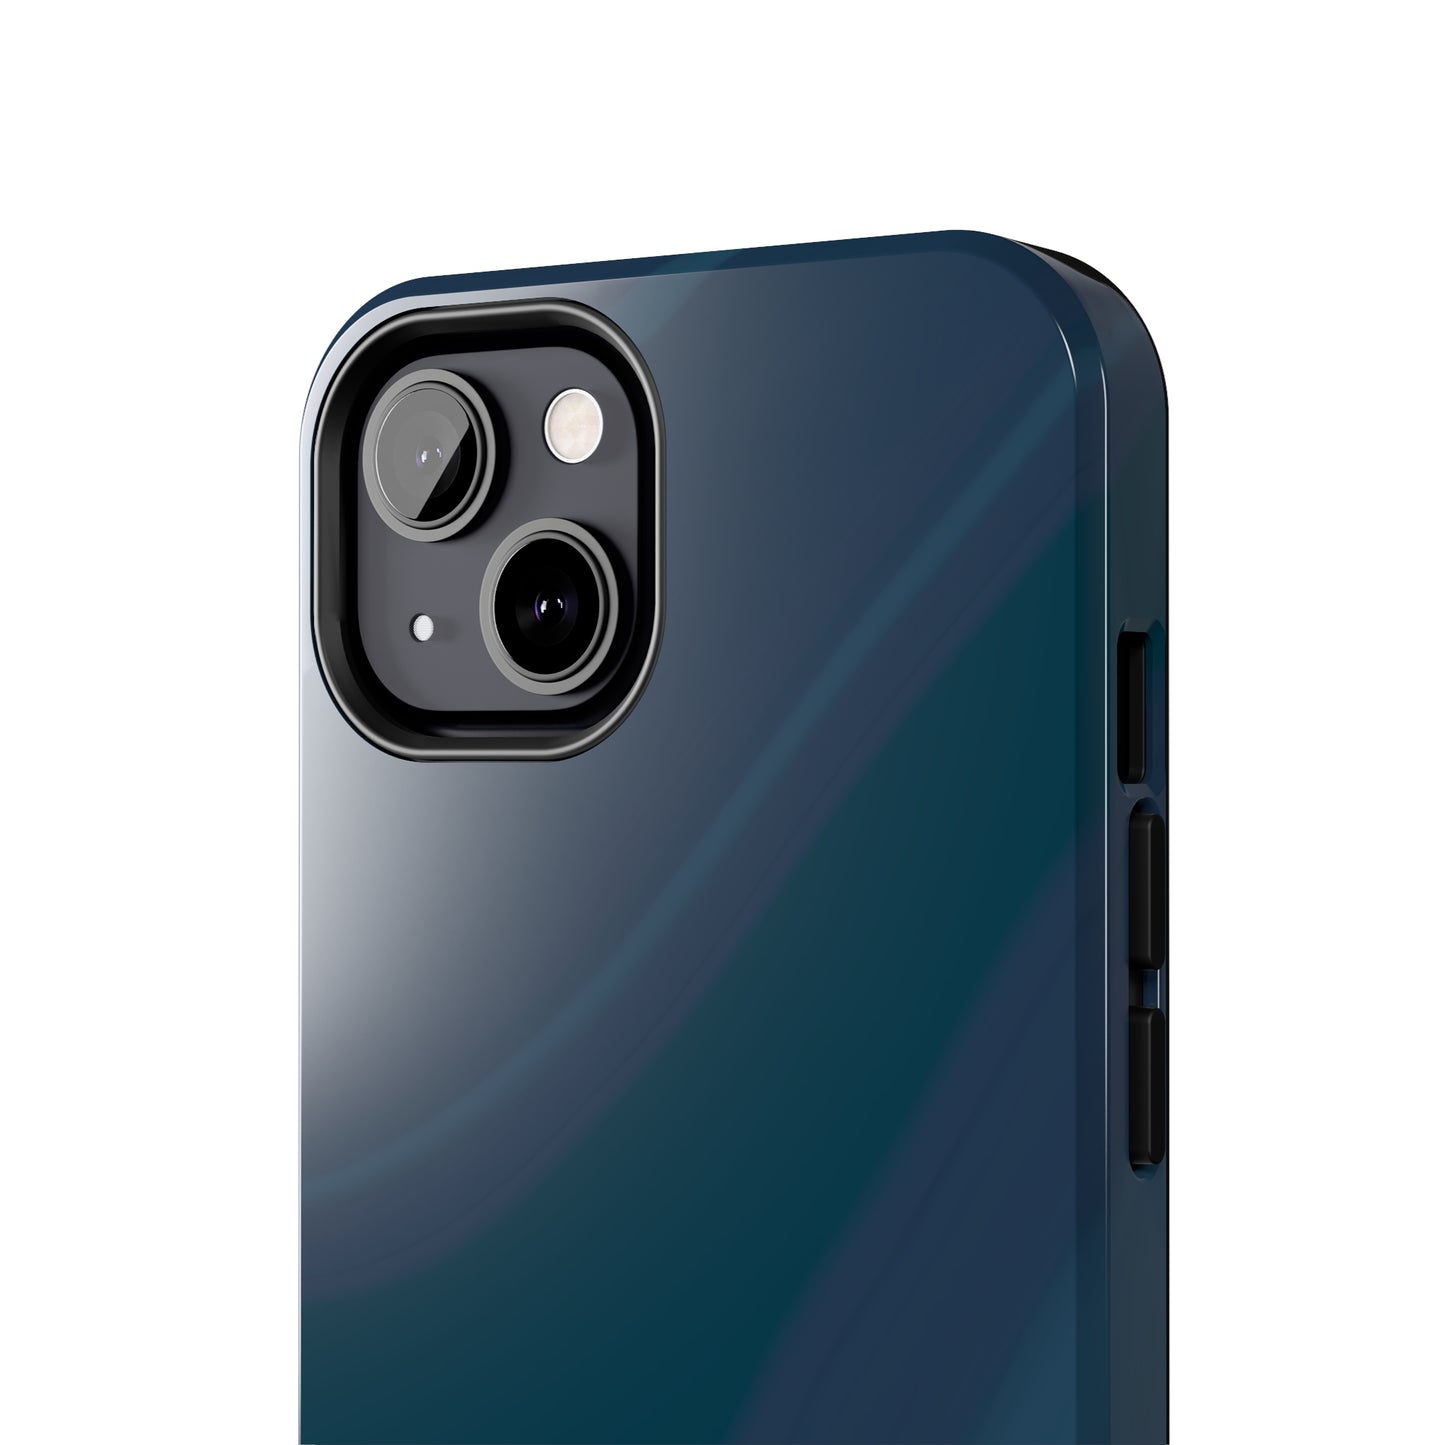 Deep Azure Current - iPhone Case